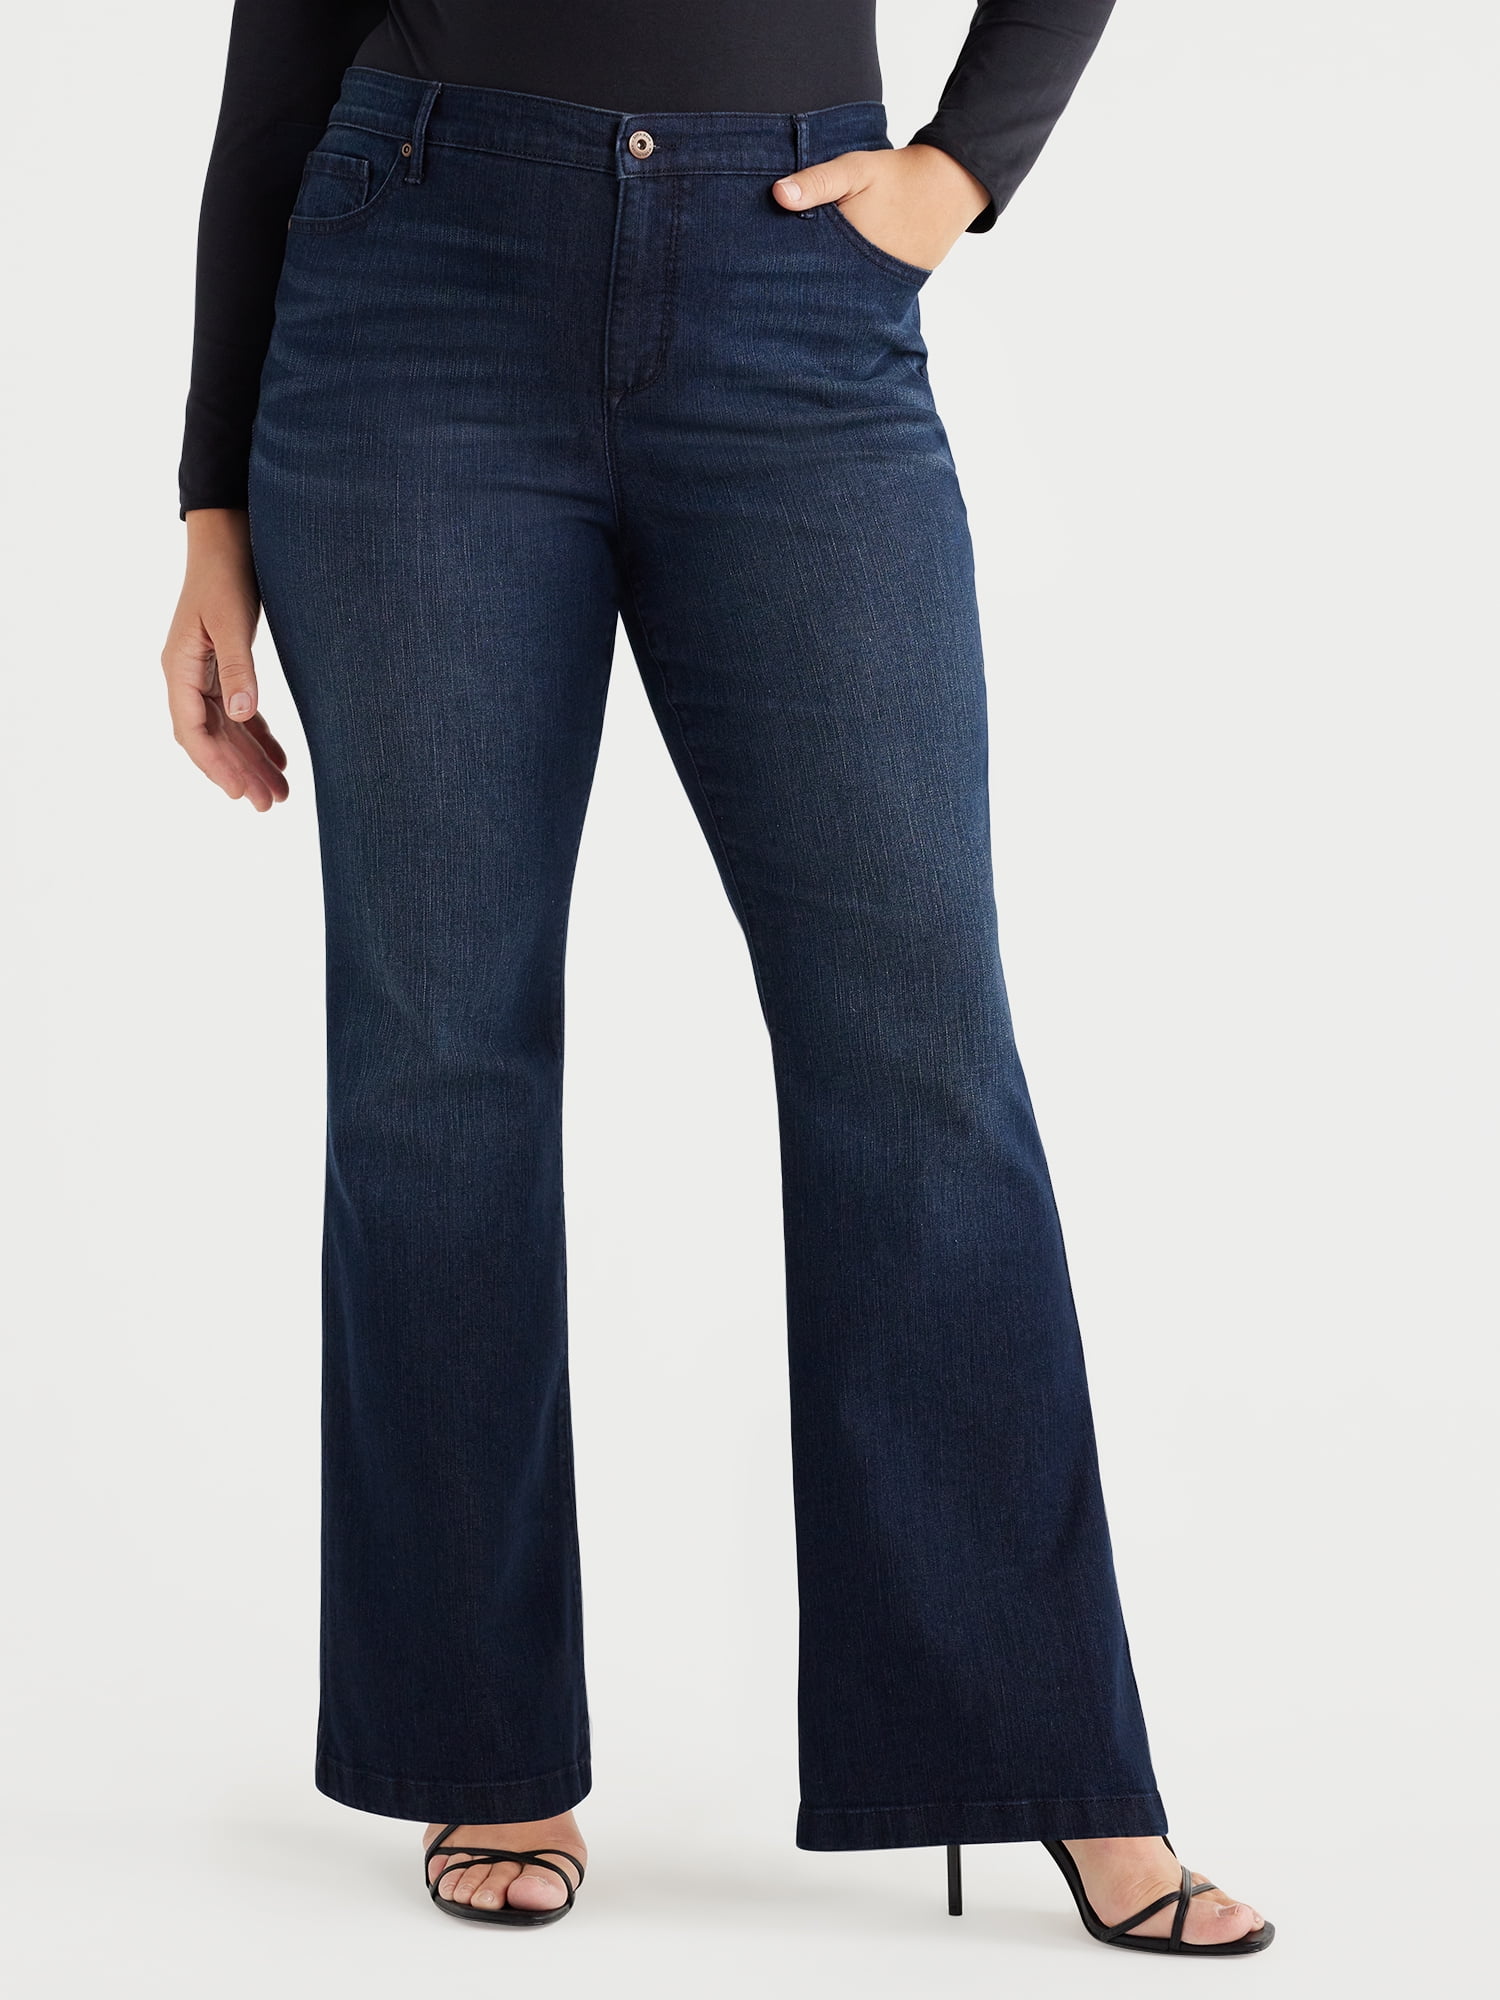 sofia by sofia vergara, Jeans, Sofia Vergara Melisa Flare Denim Jeans  Womens Size 8 Darker Blue Stretch